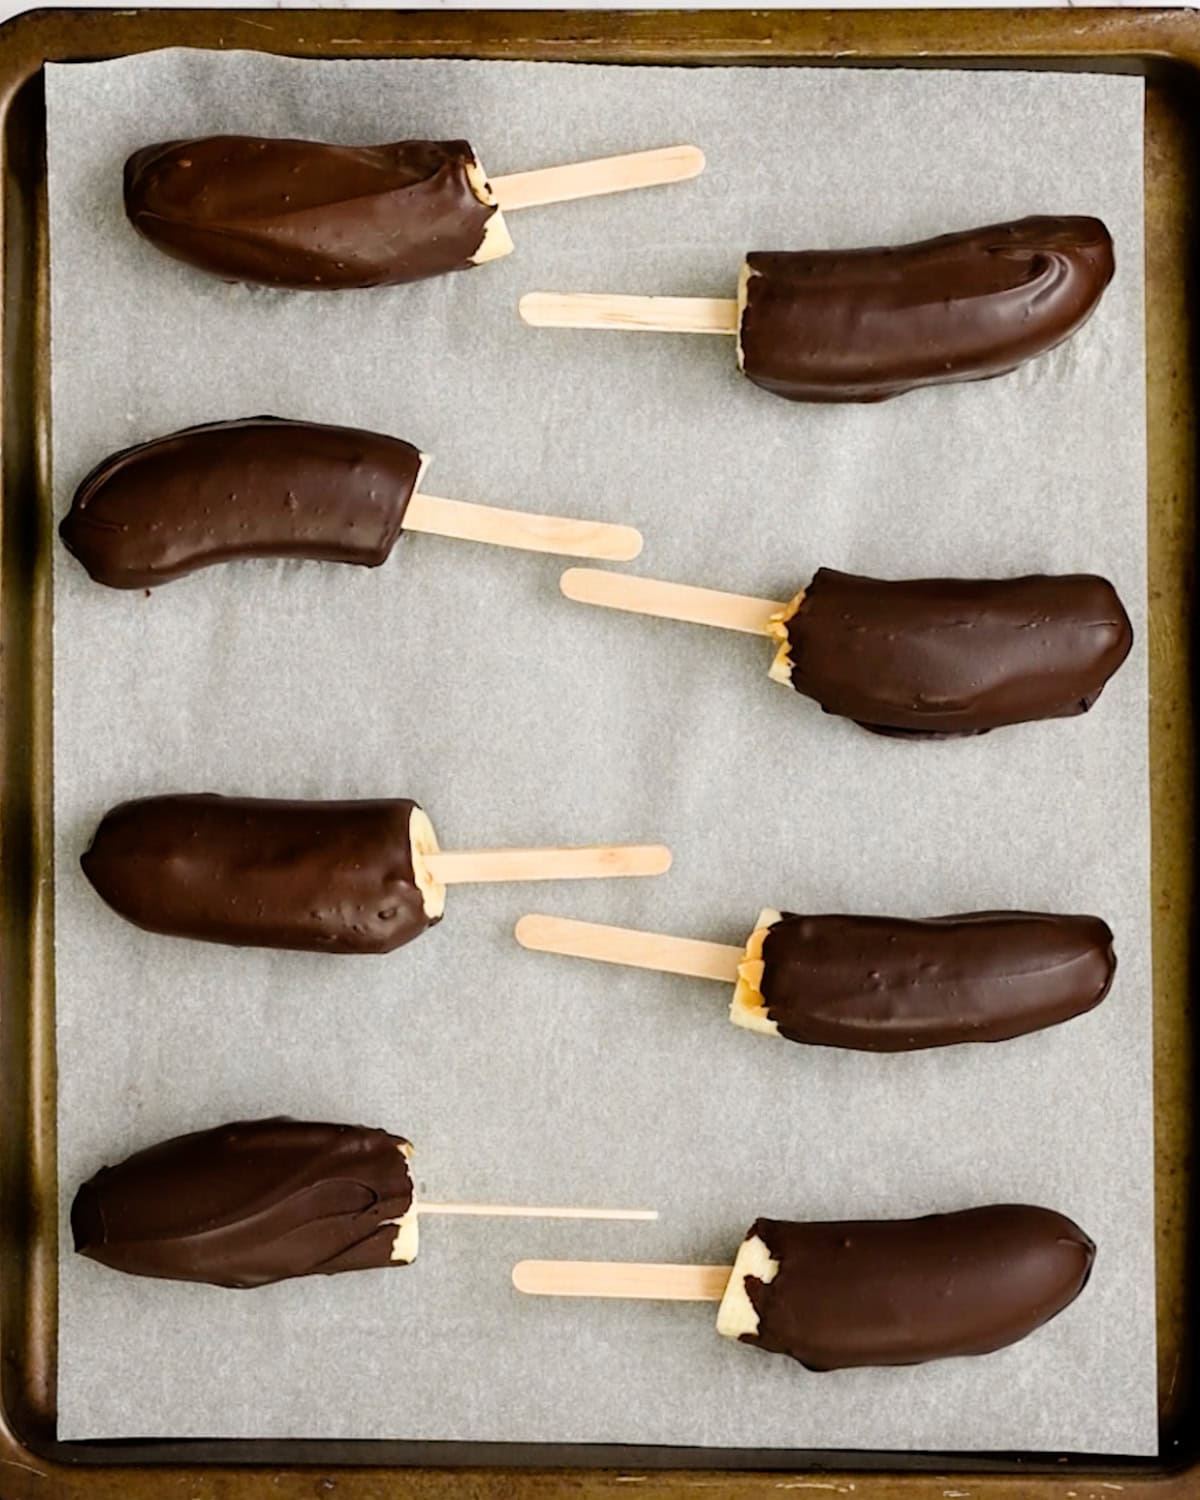 8 Chocolate Peanut Butter Frozen Bananas on a baking sheet to freeze 